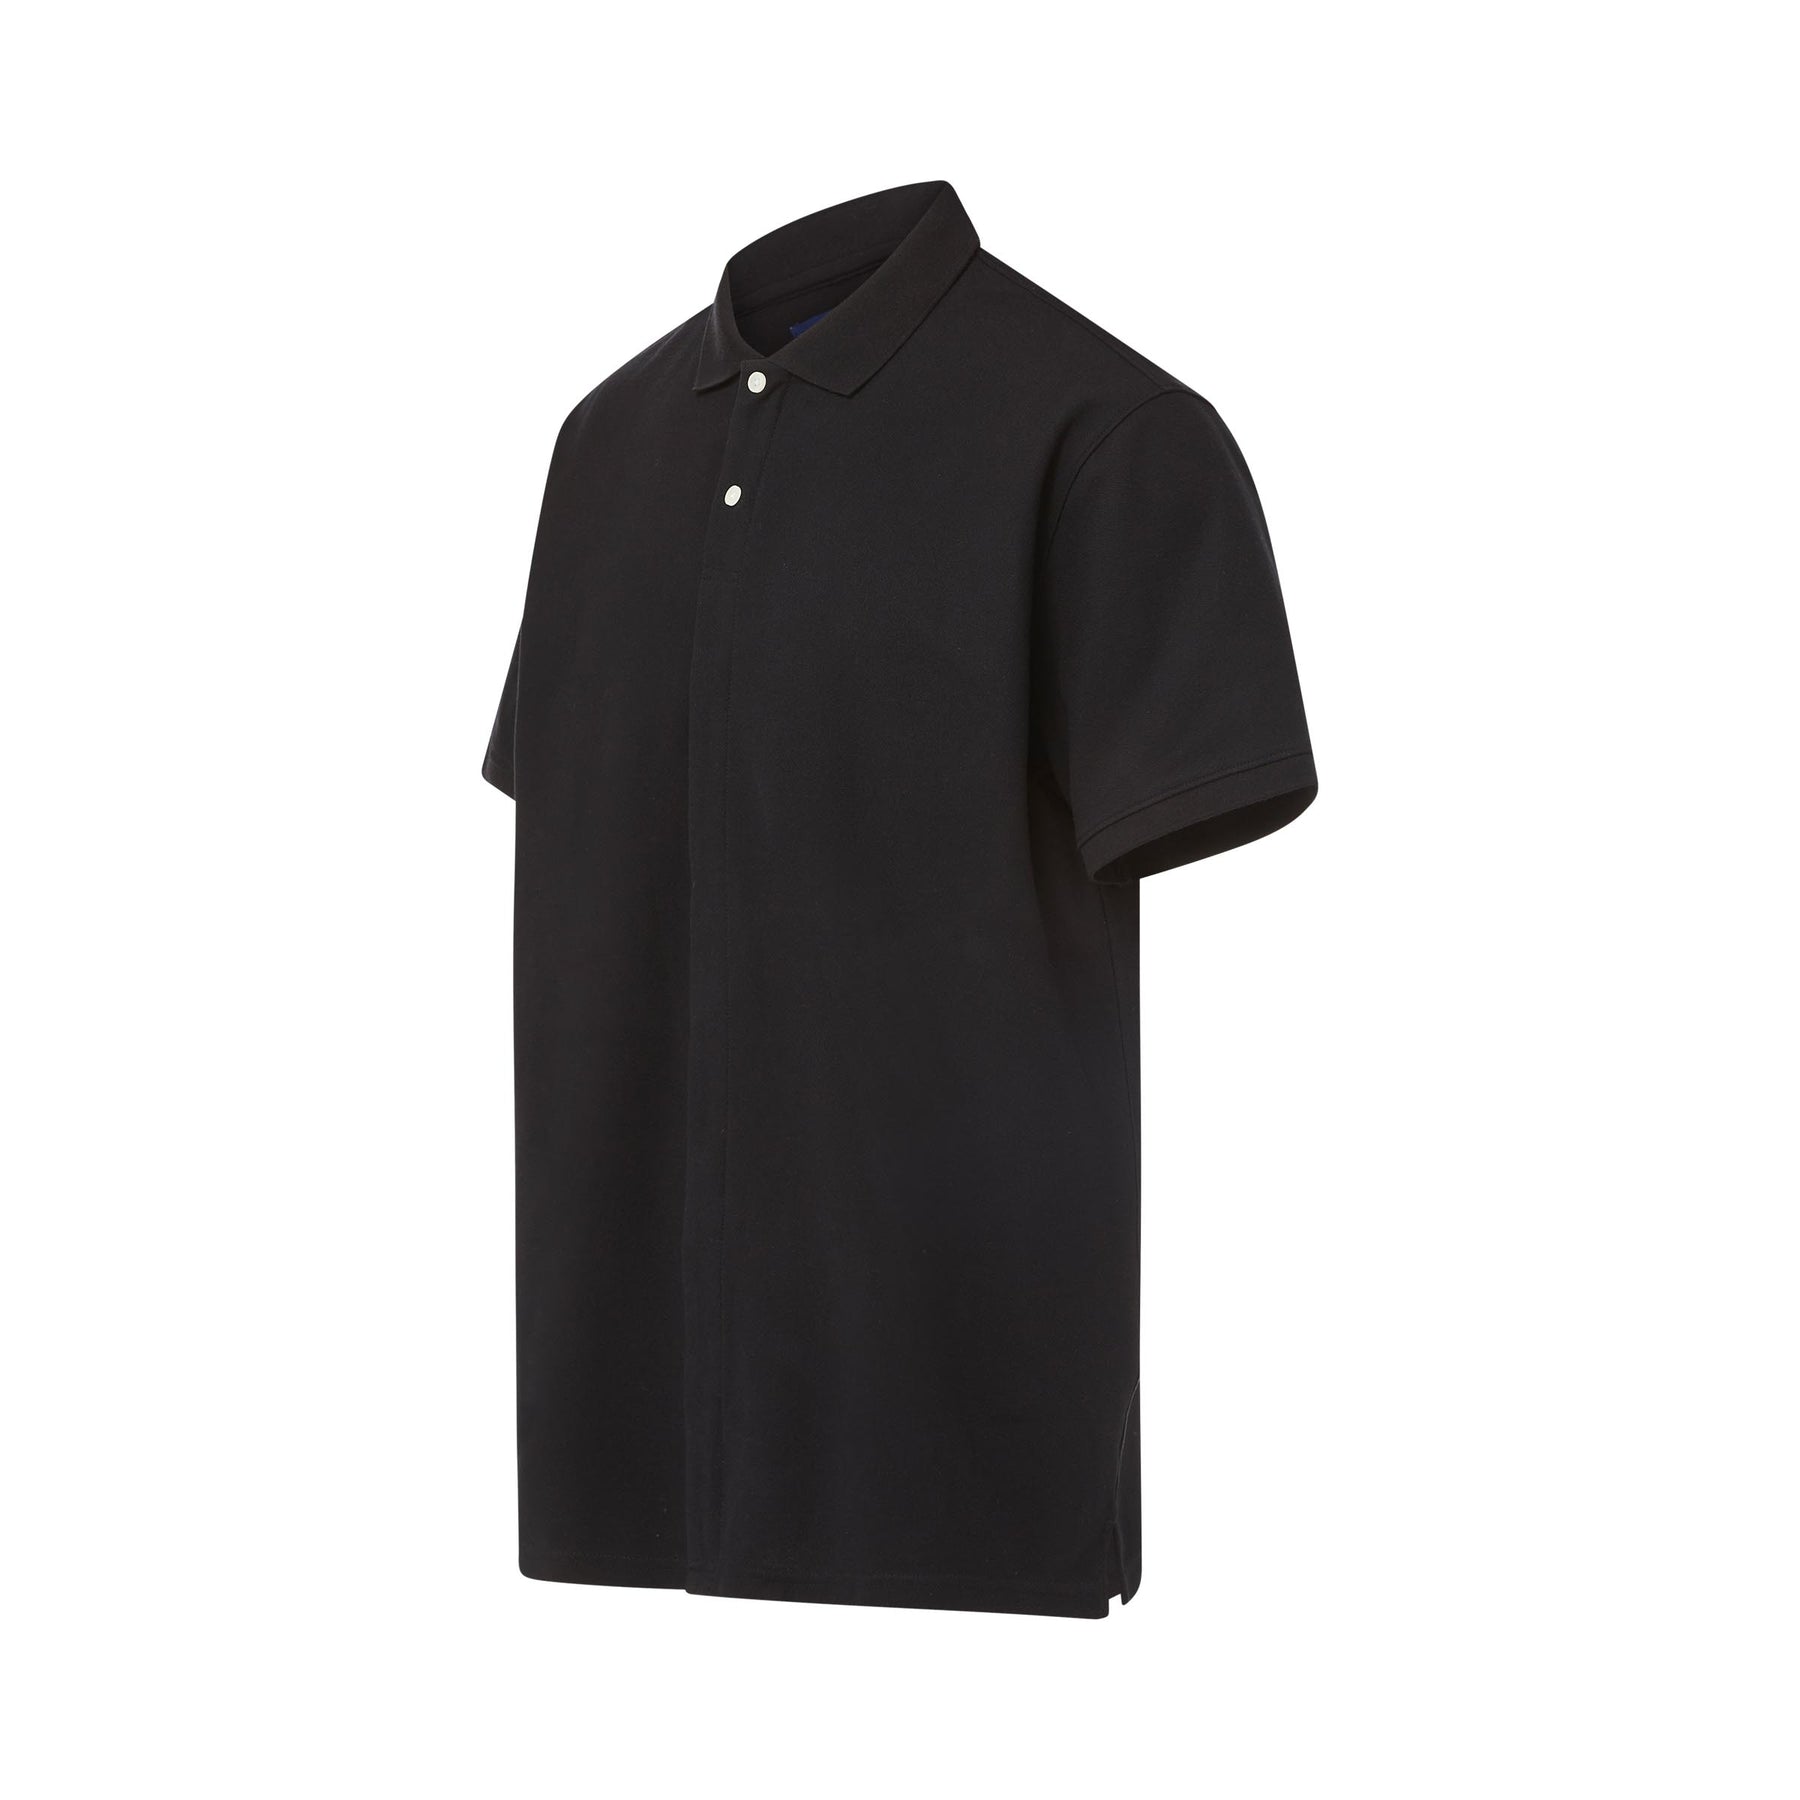 Khanomak Women's Classic Short Sleeve Pique Polo Shirt Top Charcoal / Medium